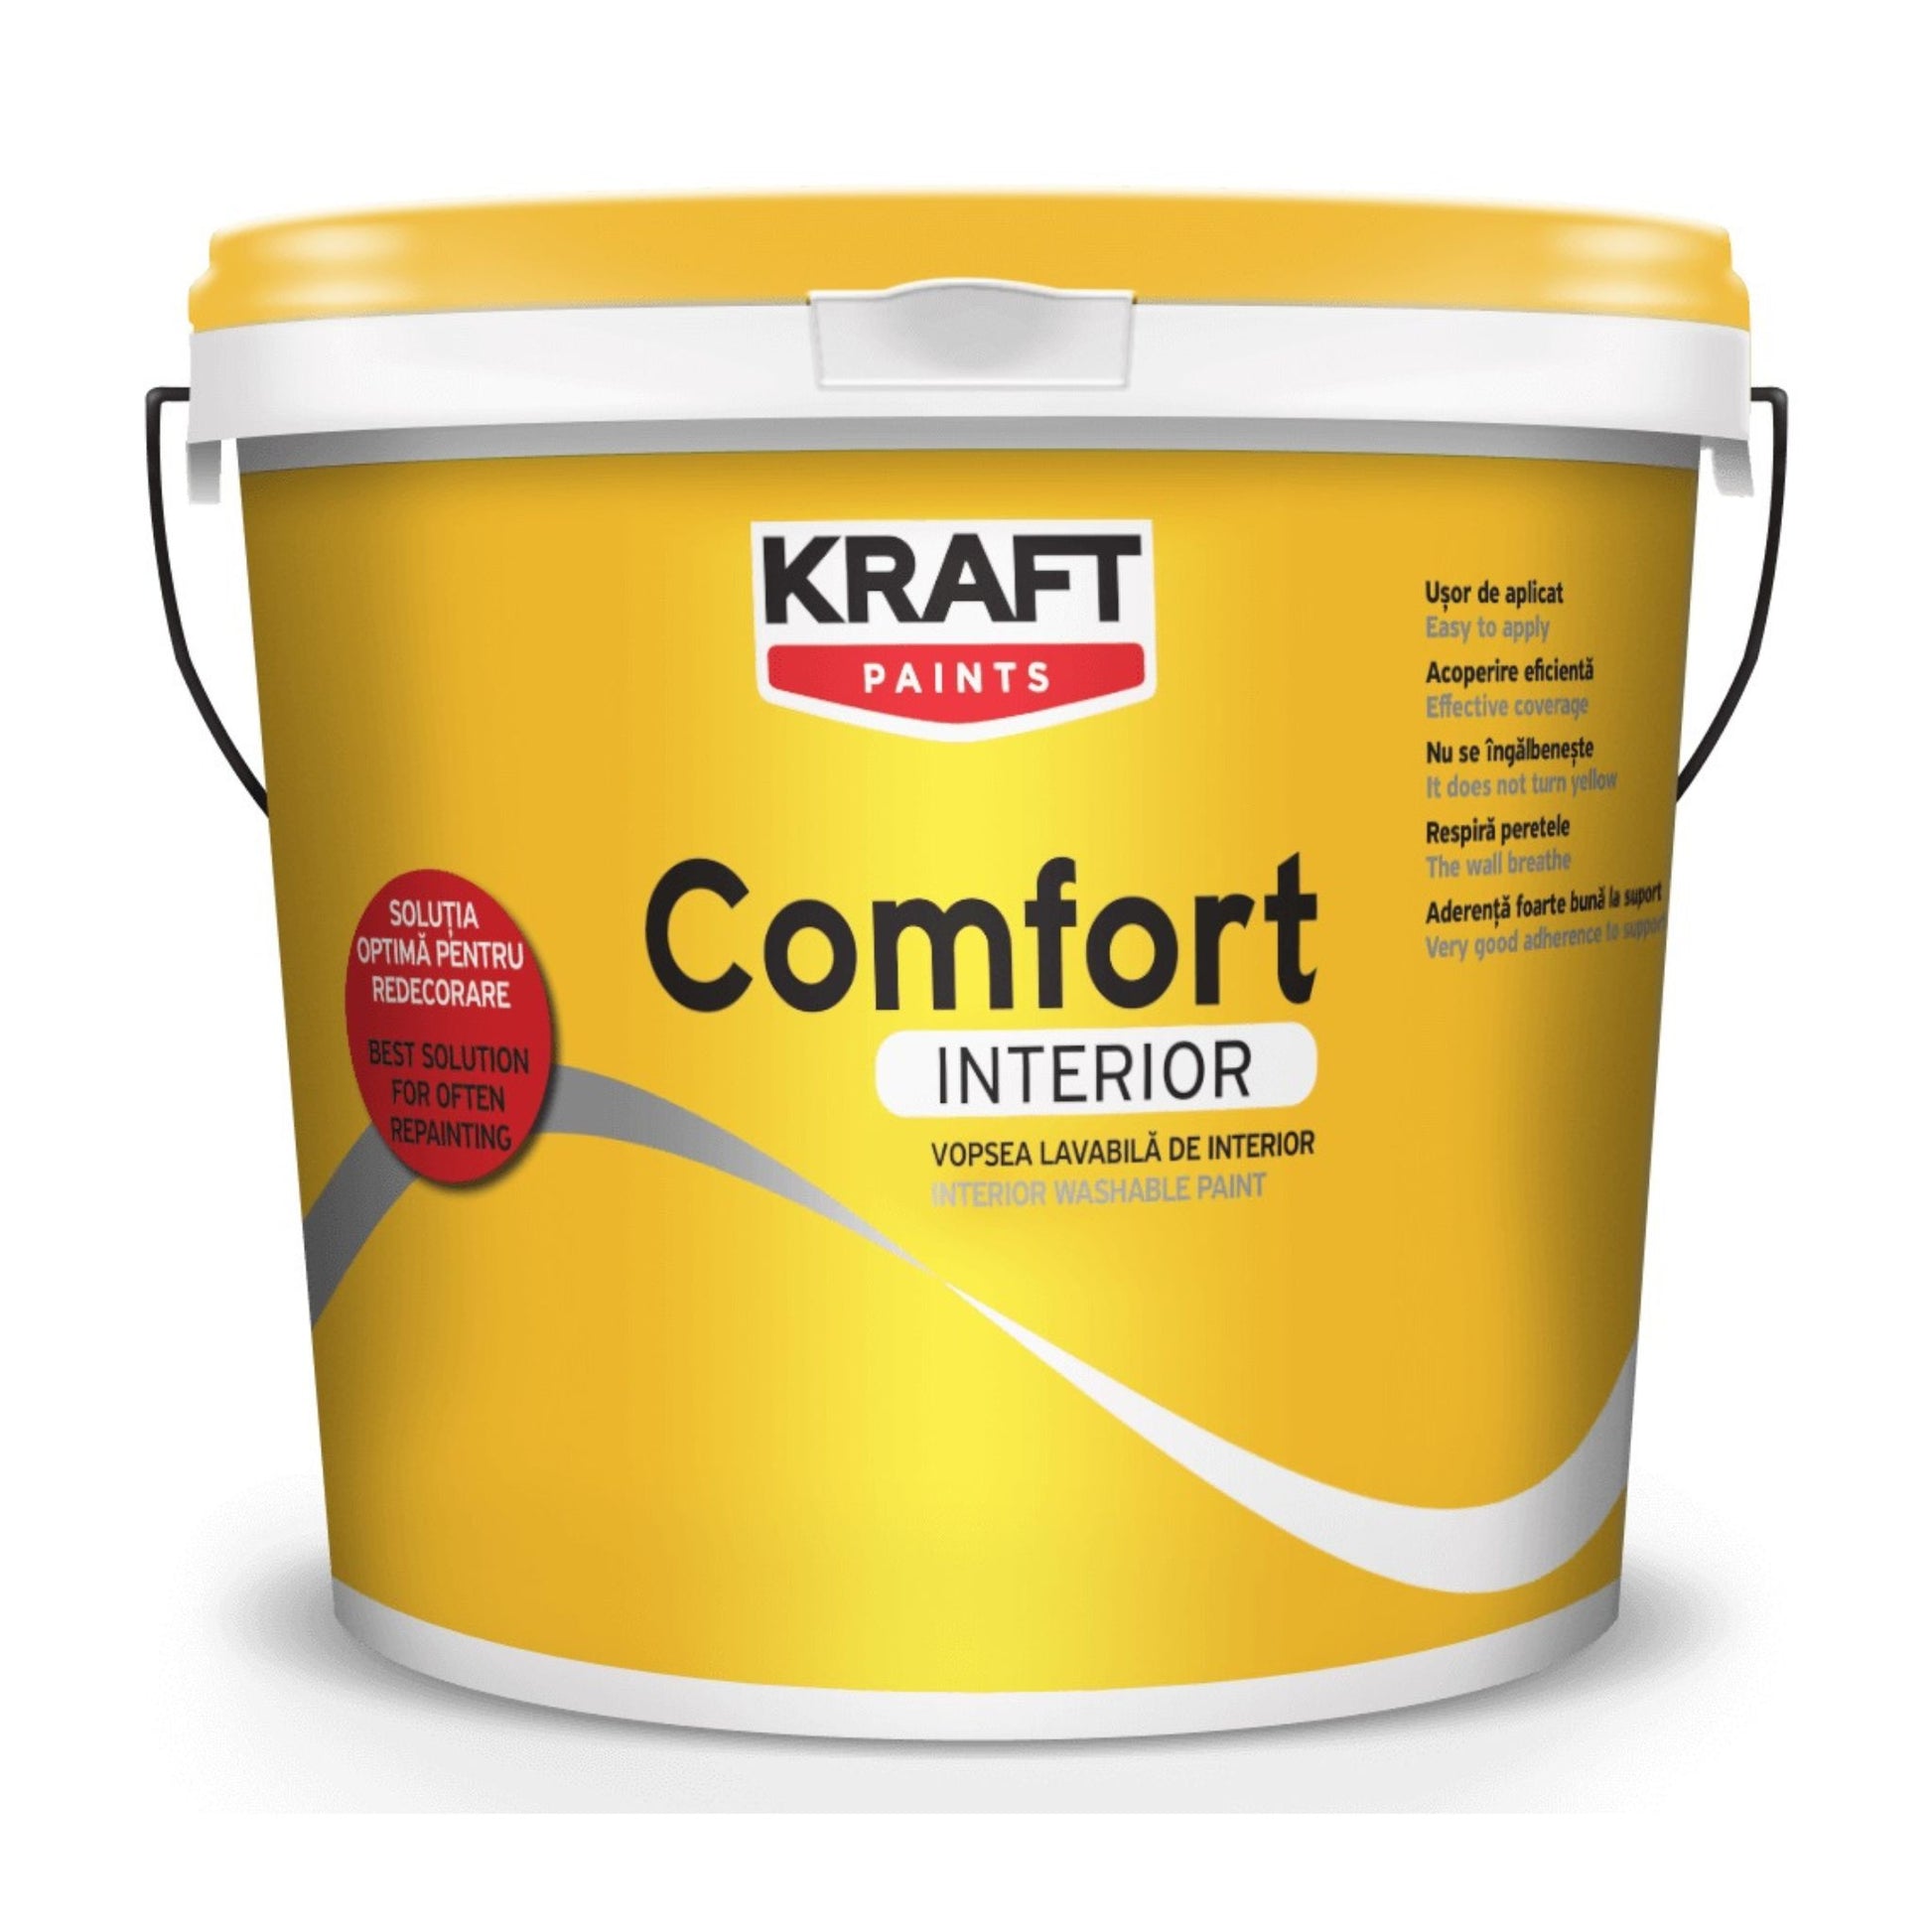 Vopsea lavabila Kraft Comfort Interior - Shopdecor.ro Vopsea lavabila